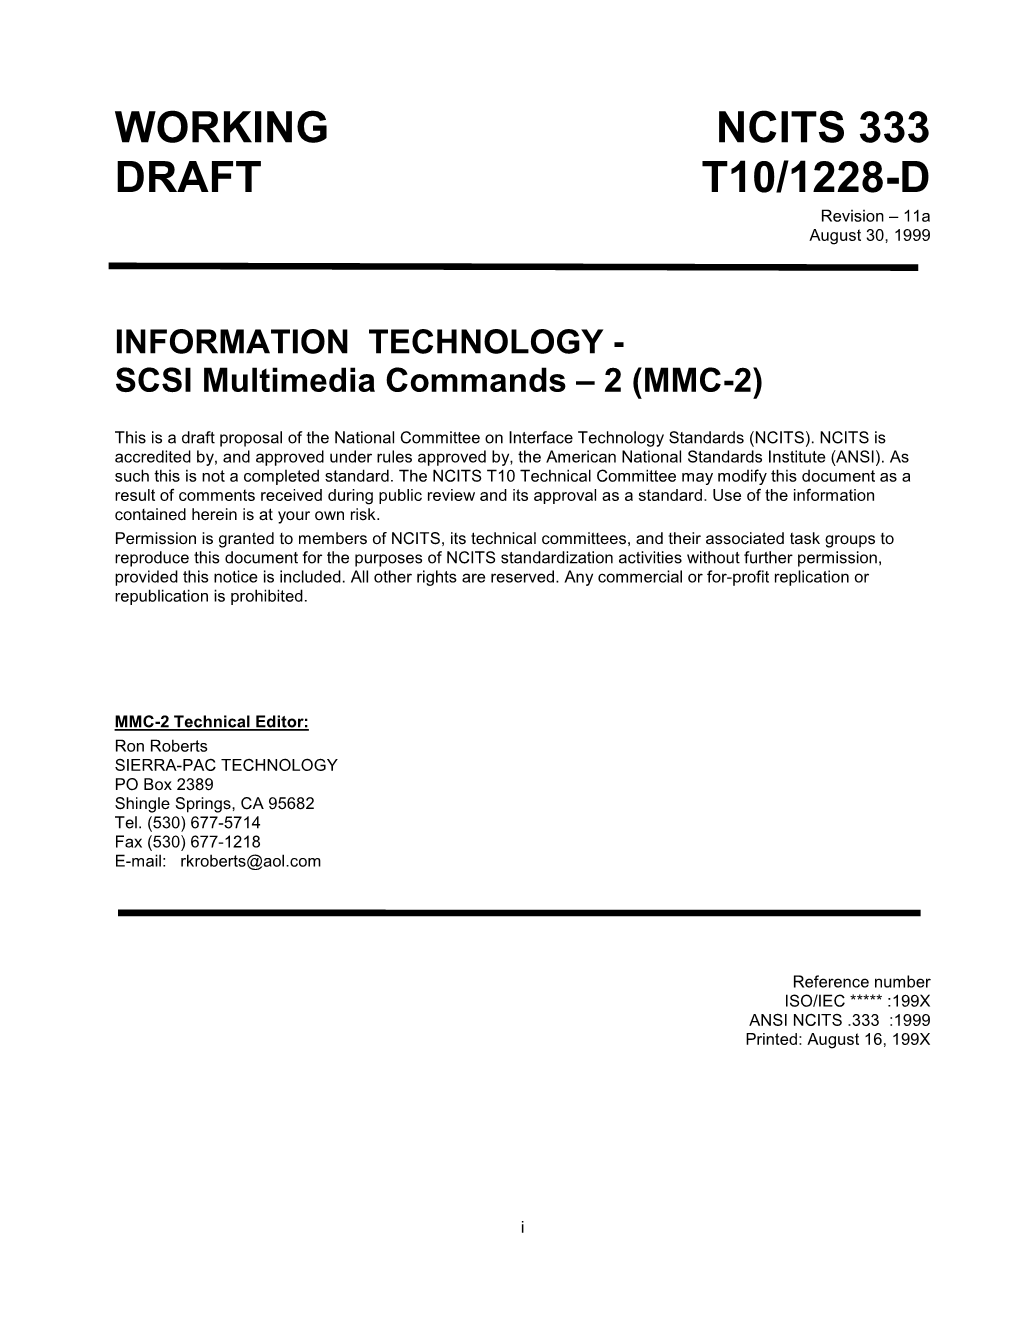 SCSI Multimedia Commands – 2 (MMC-2)